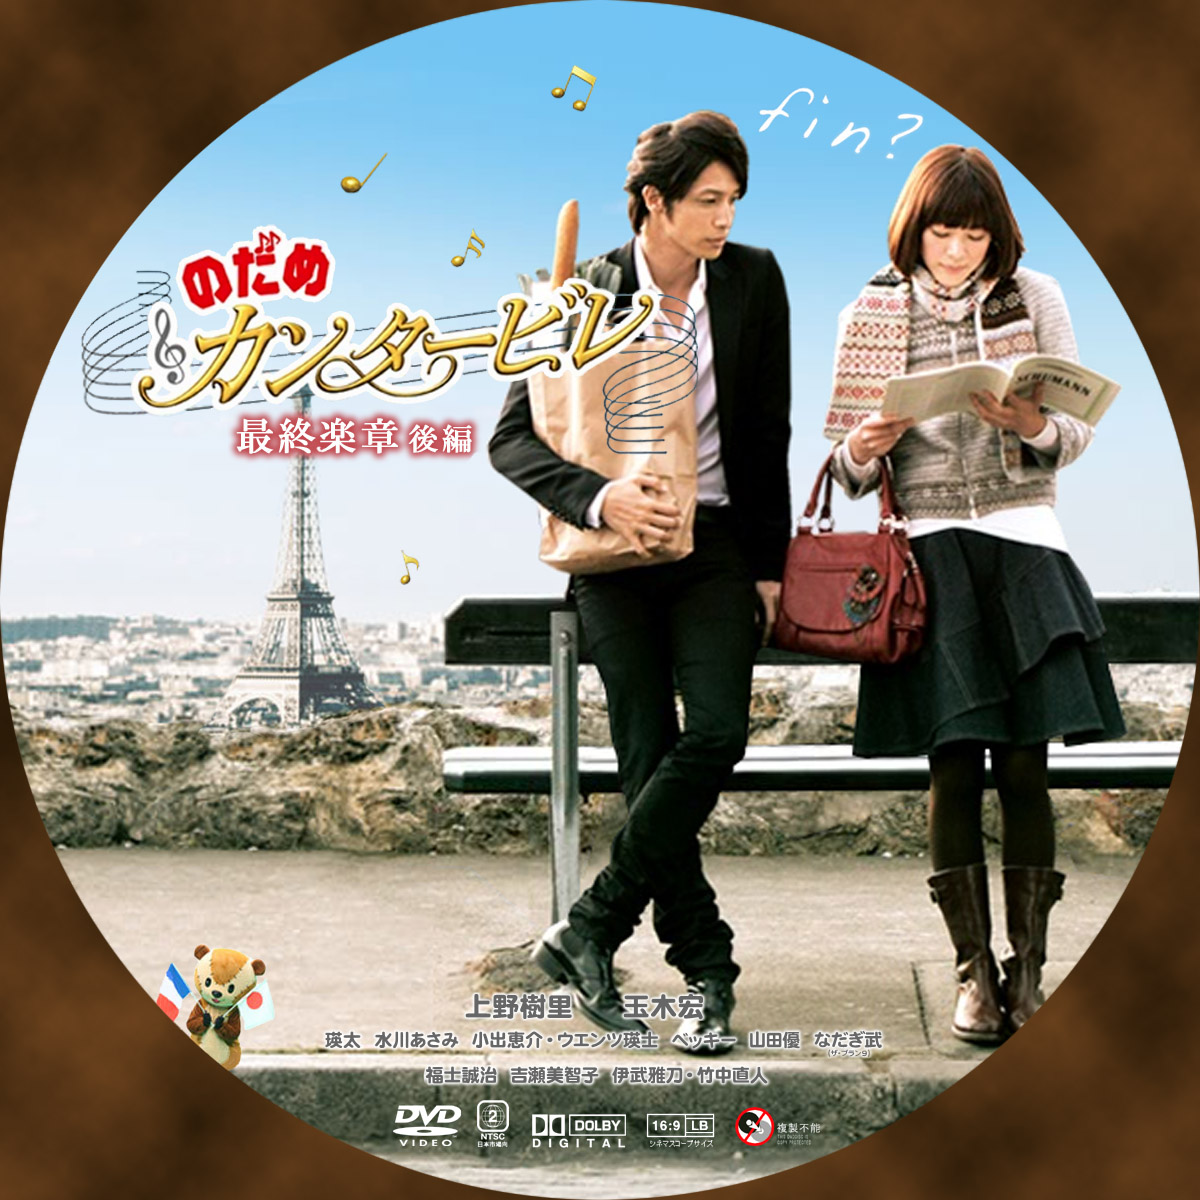 DVDBOX のだめカンタービレinヨーロッパ - 邦画・日本映画